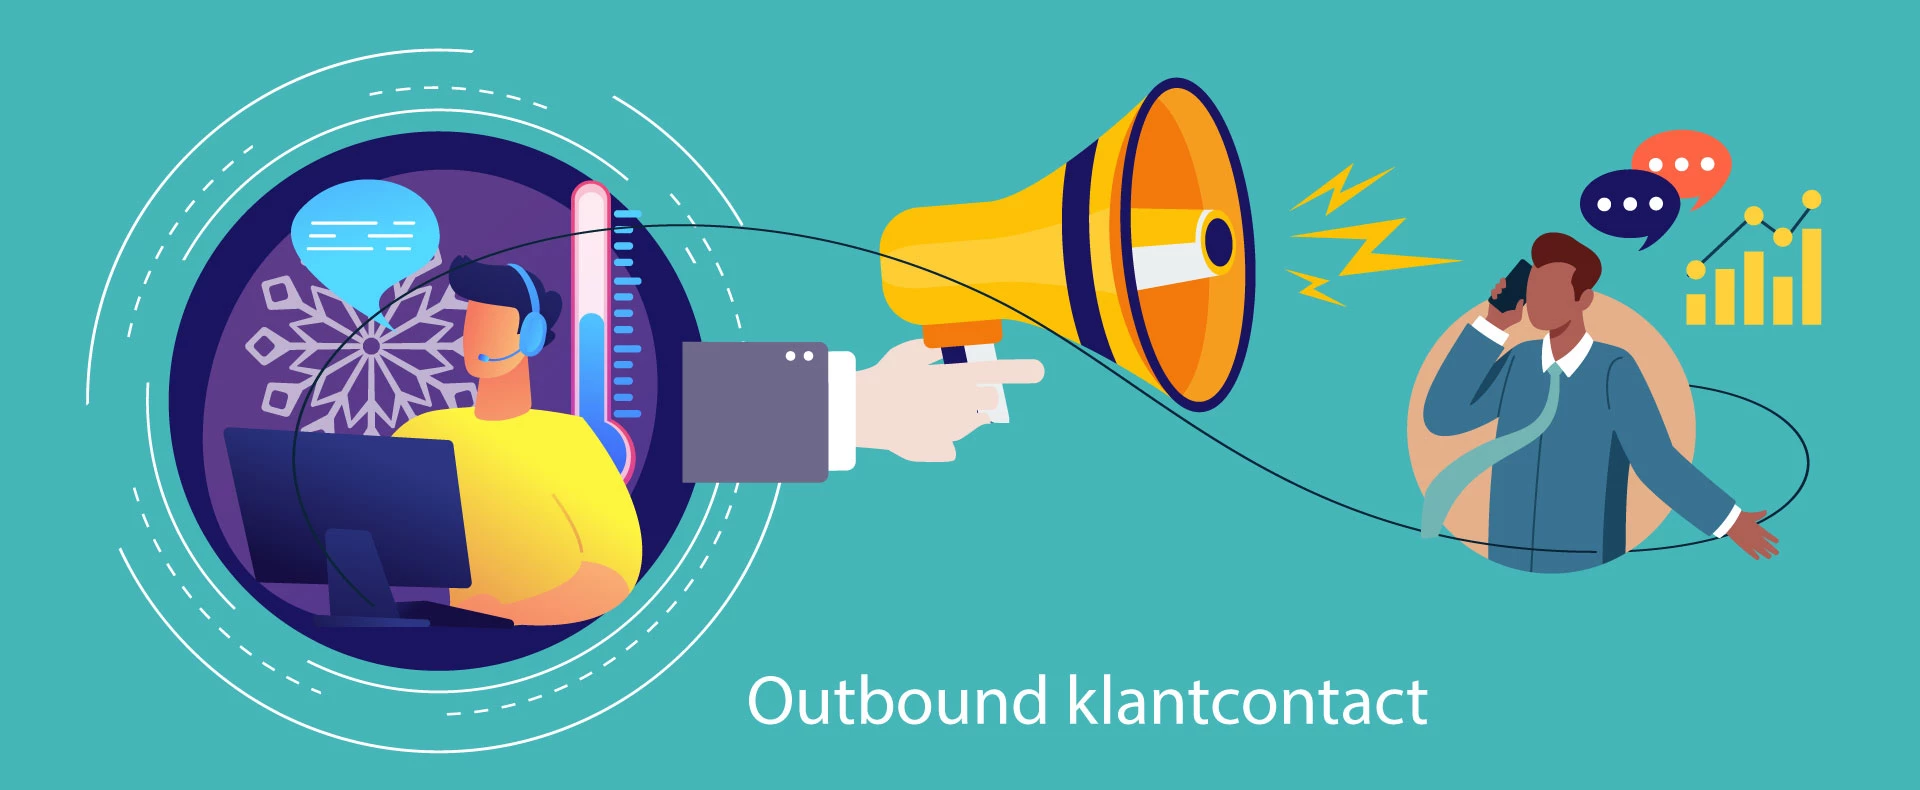 outbound_klantcontact